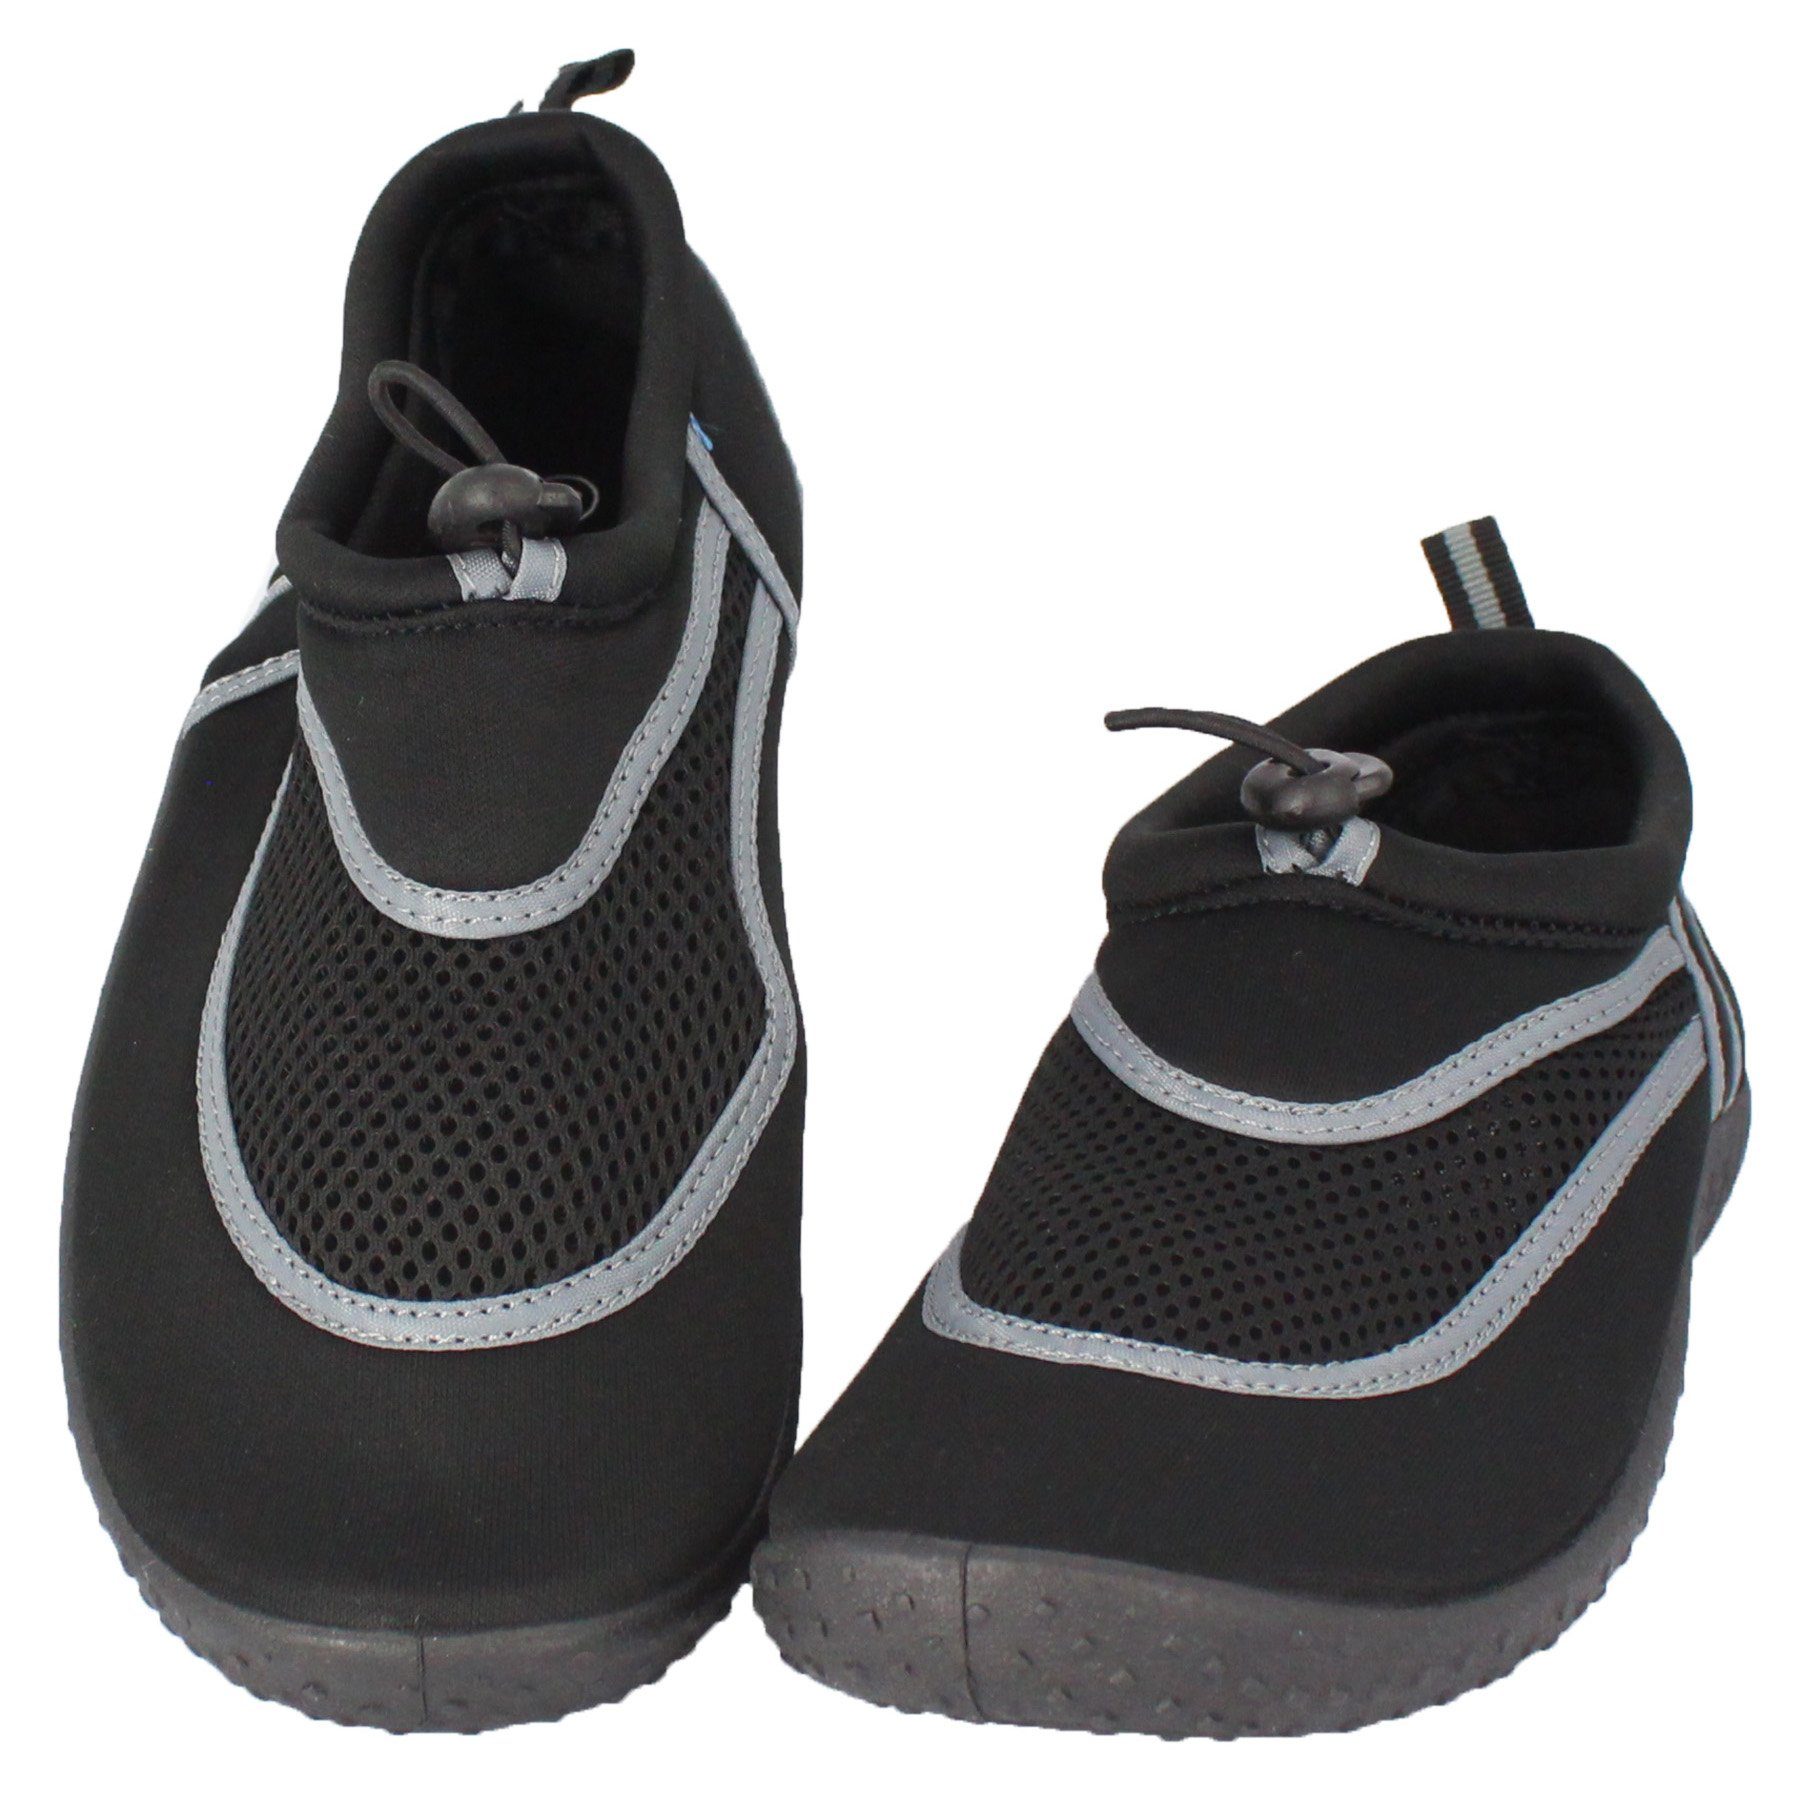 Beck Badeschuh Aqua Badeschuh (leichte, flexible, stabile Schuhe, für geschützte Füße an Pool und Strand) rutschfeste flexible Laufsohle, schnelltrocknend schwarz